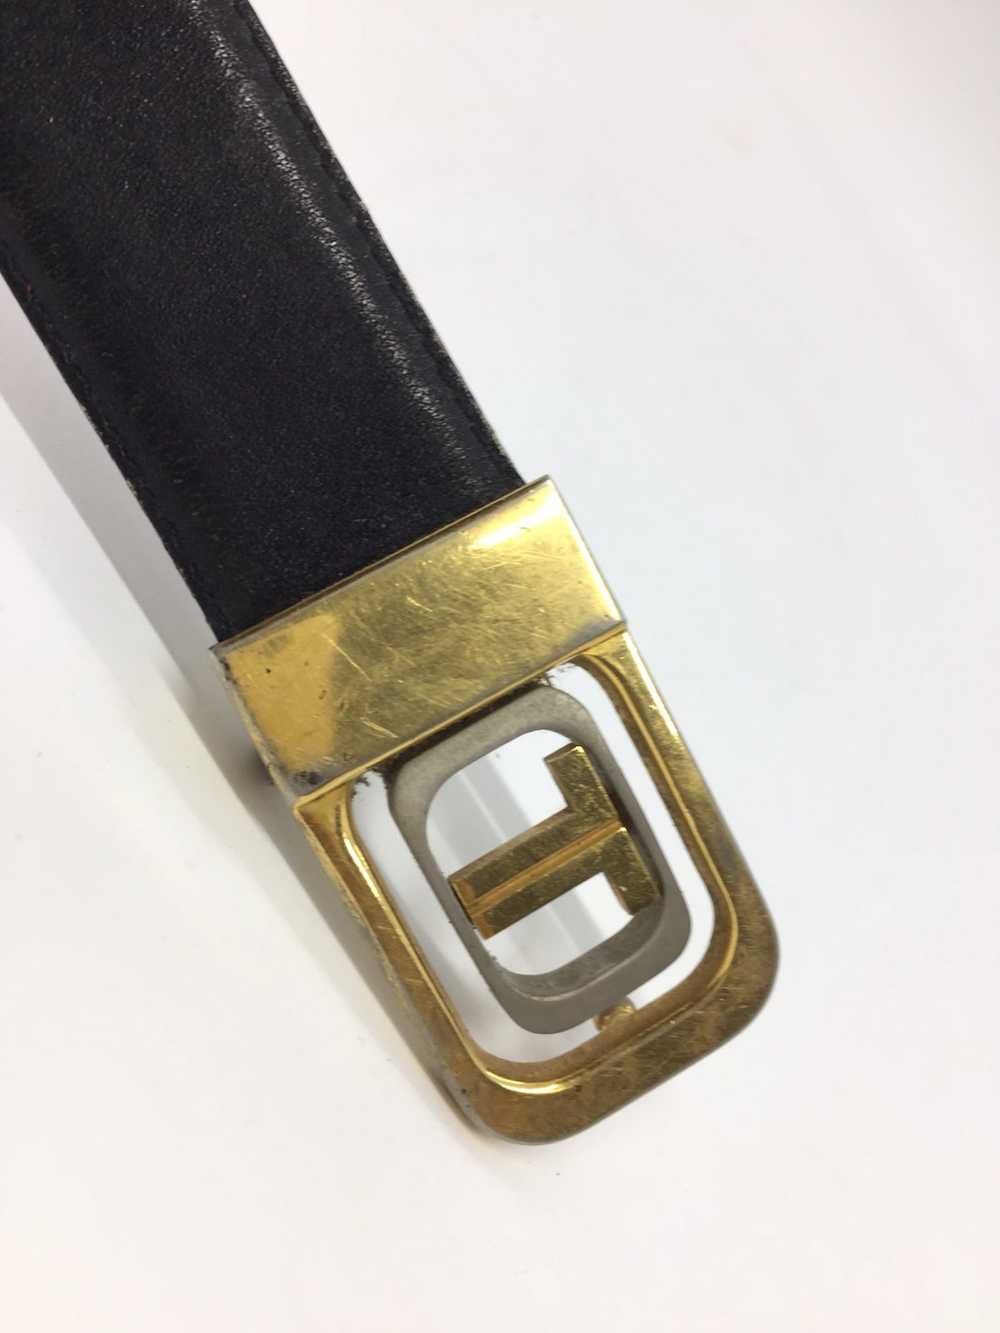 Lanvin × Rare lanvin belt gold buckle - image 3